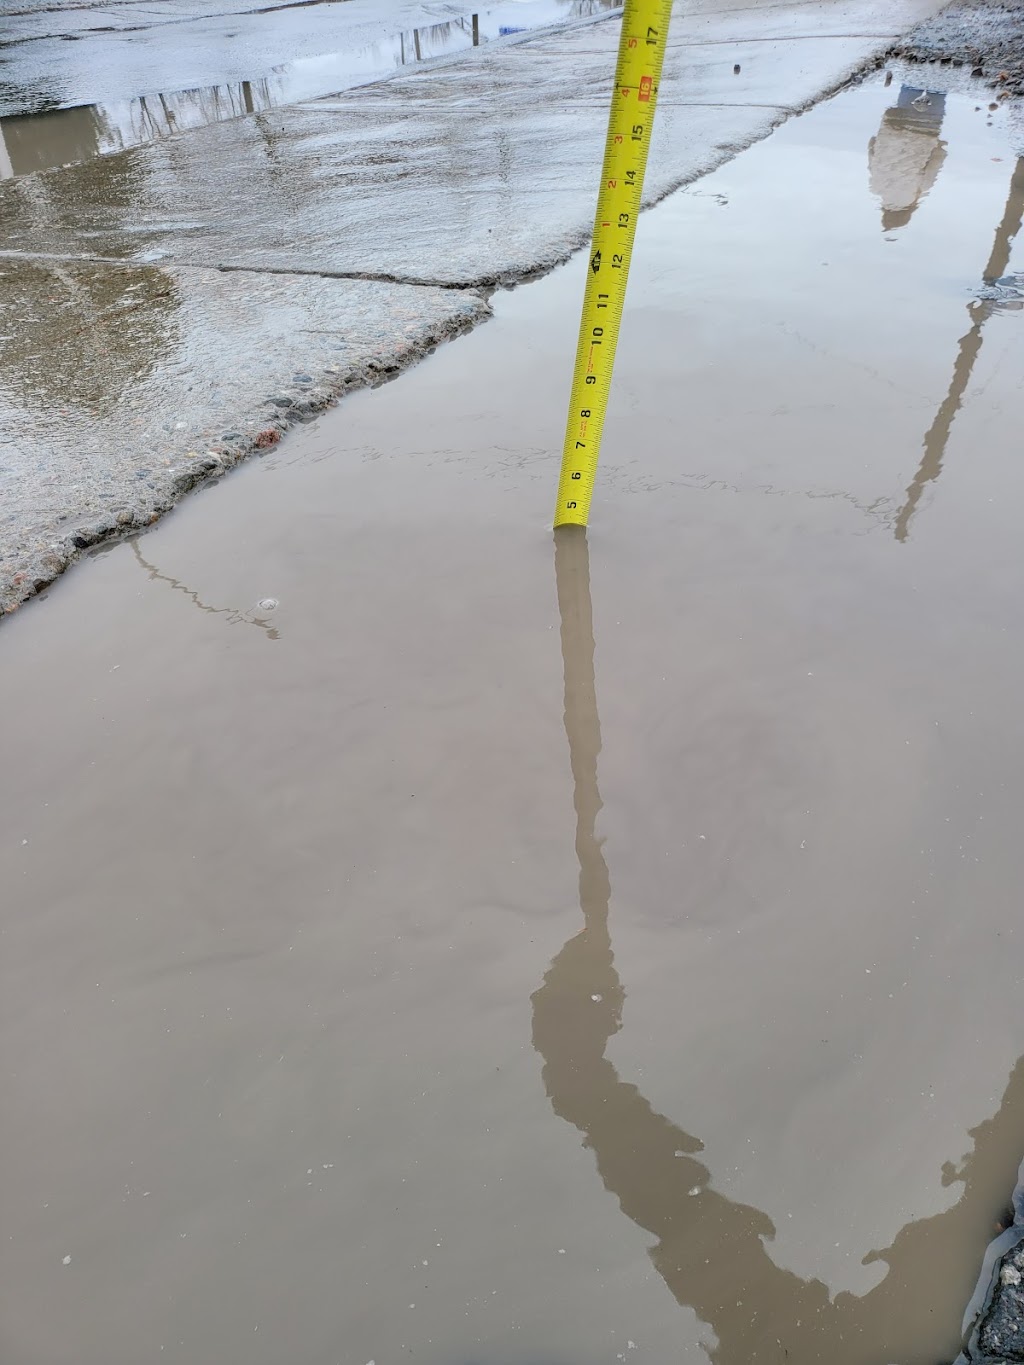 Potholes Expert | 1395 Mnt Chénier, Les Cèdres, QC J7T 1L9, Canada | Phone: (833) 782-9349